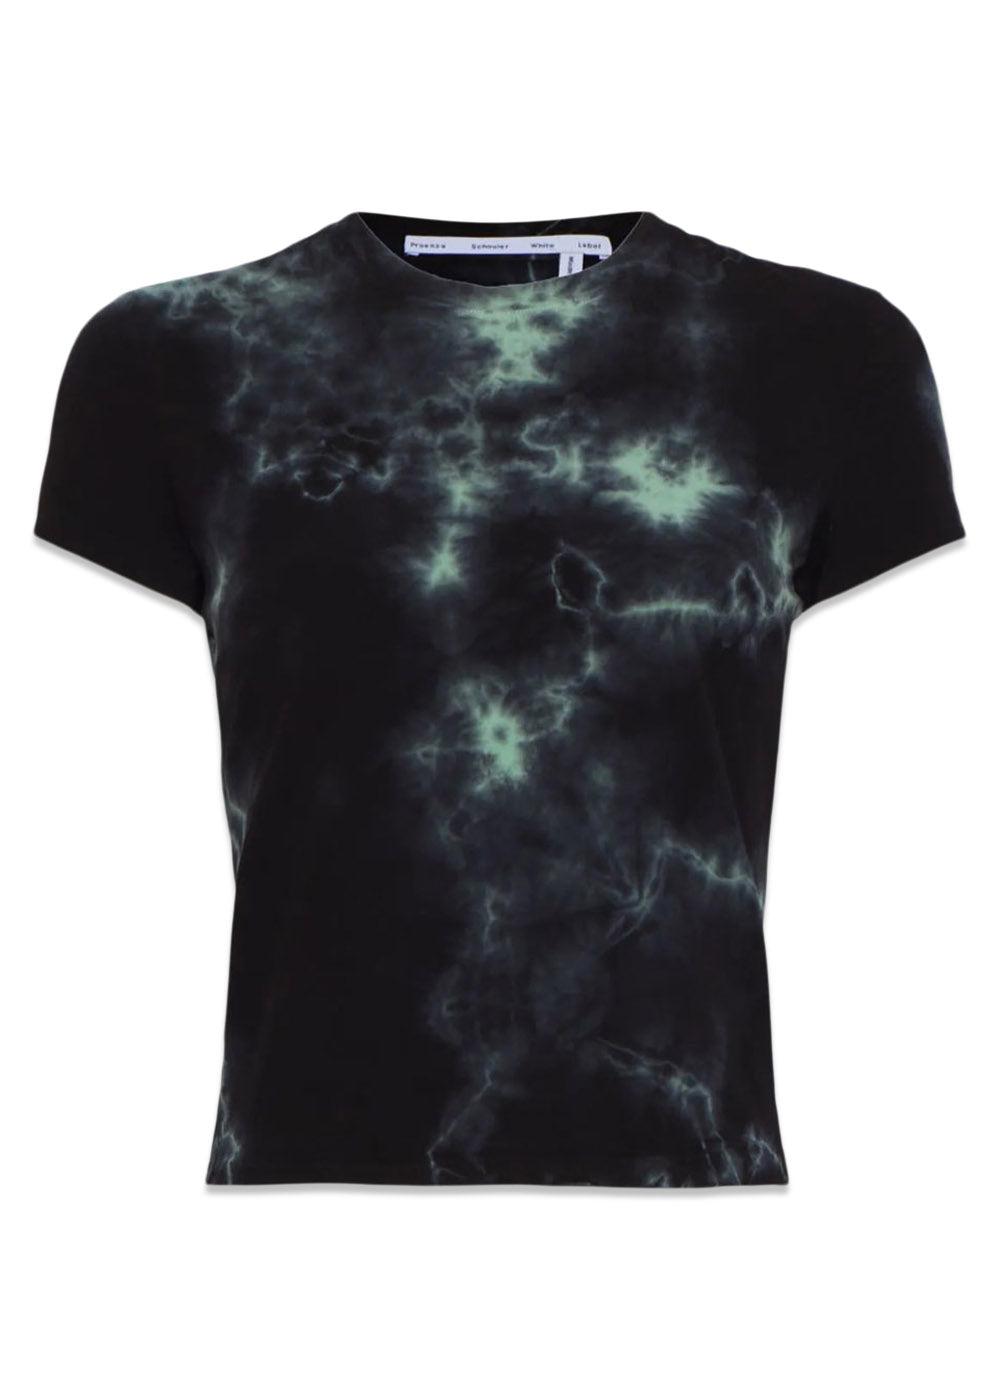 Proenza Schoulers Tie Dye T-Shirt - Black/Jade. Køb t-shirts her.